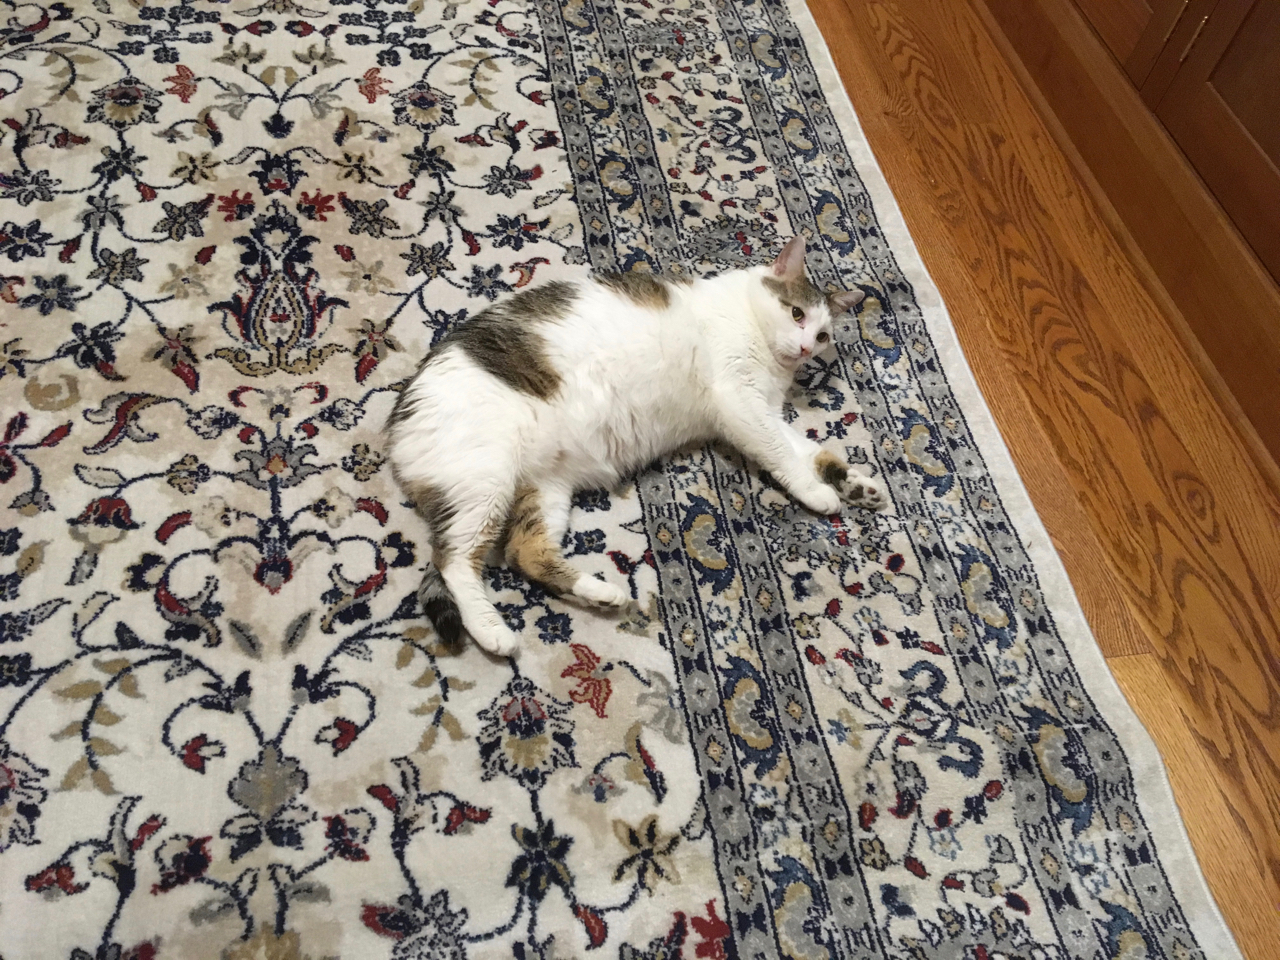 Joe lounging on the rug